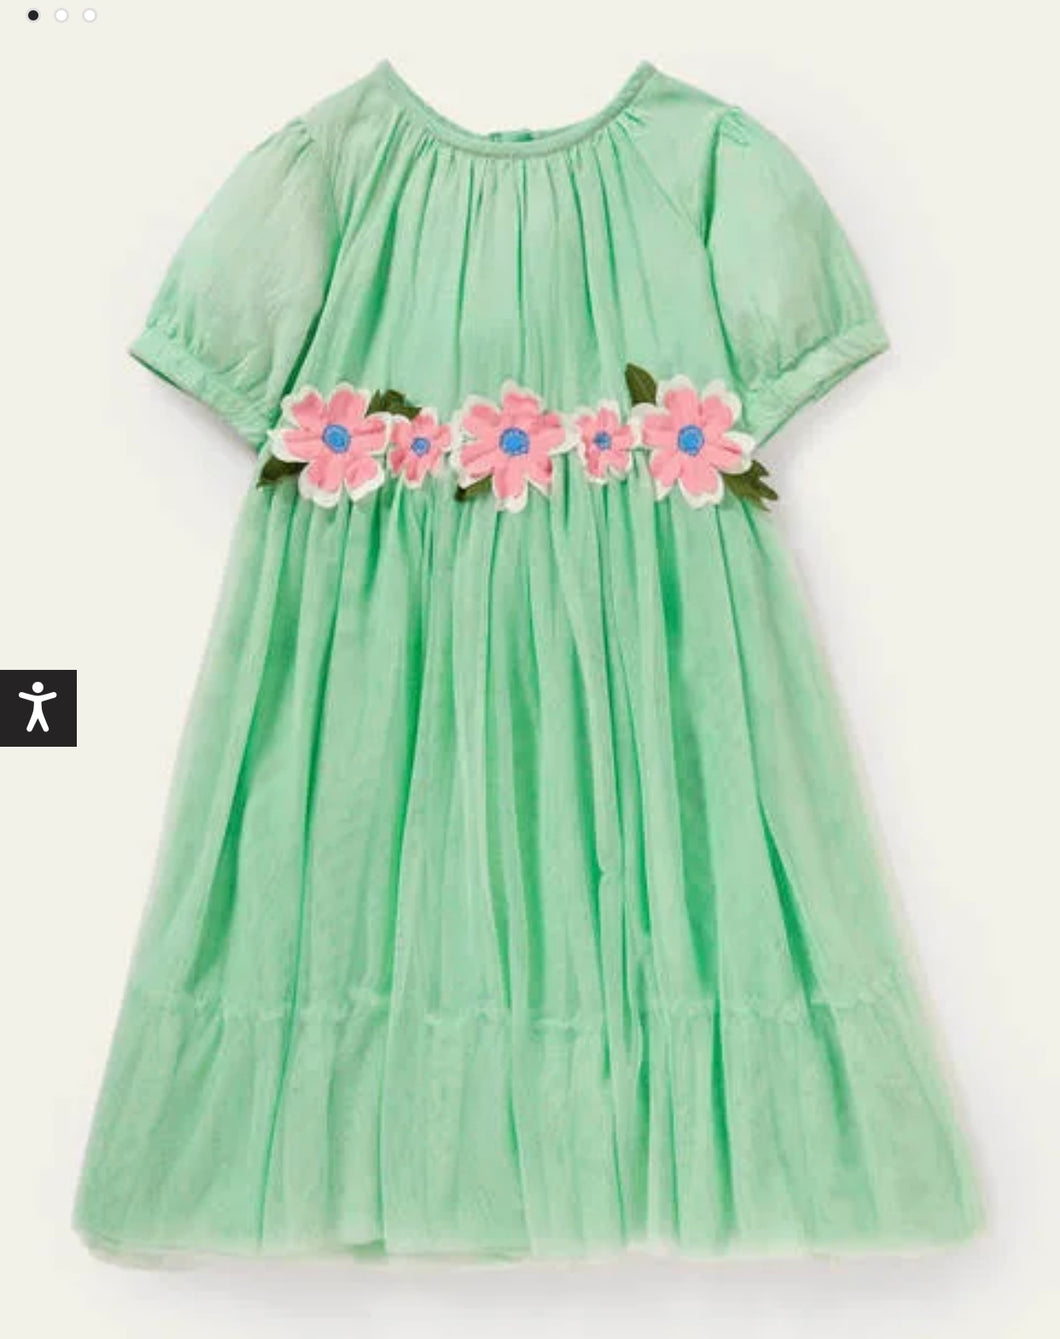 NWT Mini Boden Flower Appliqué Dress